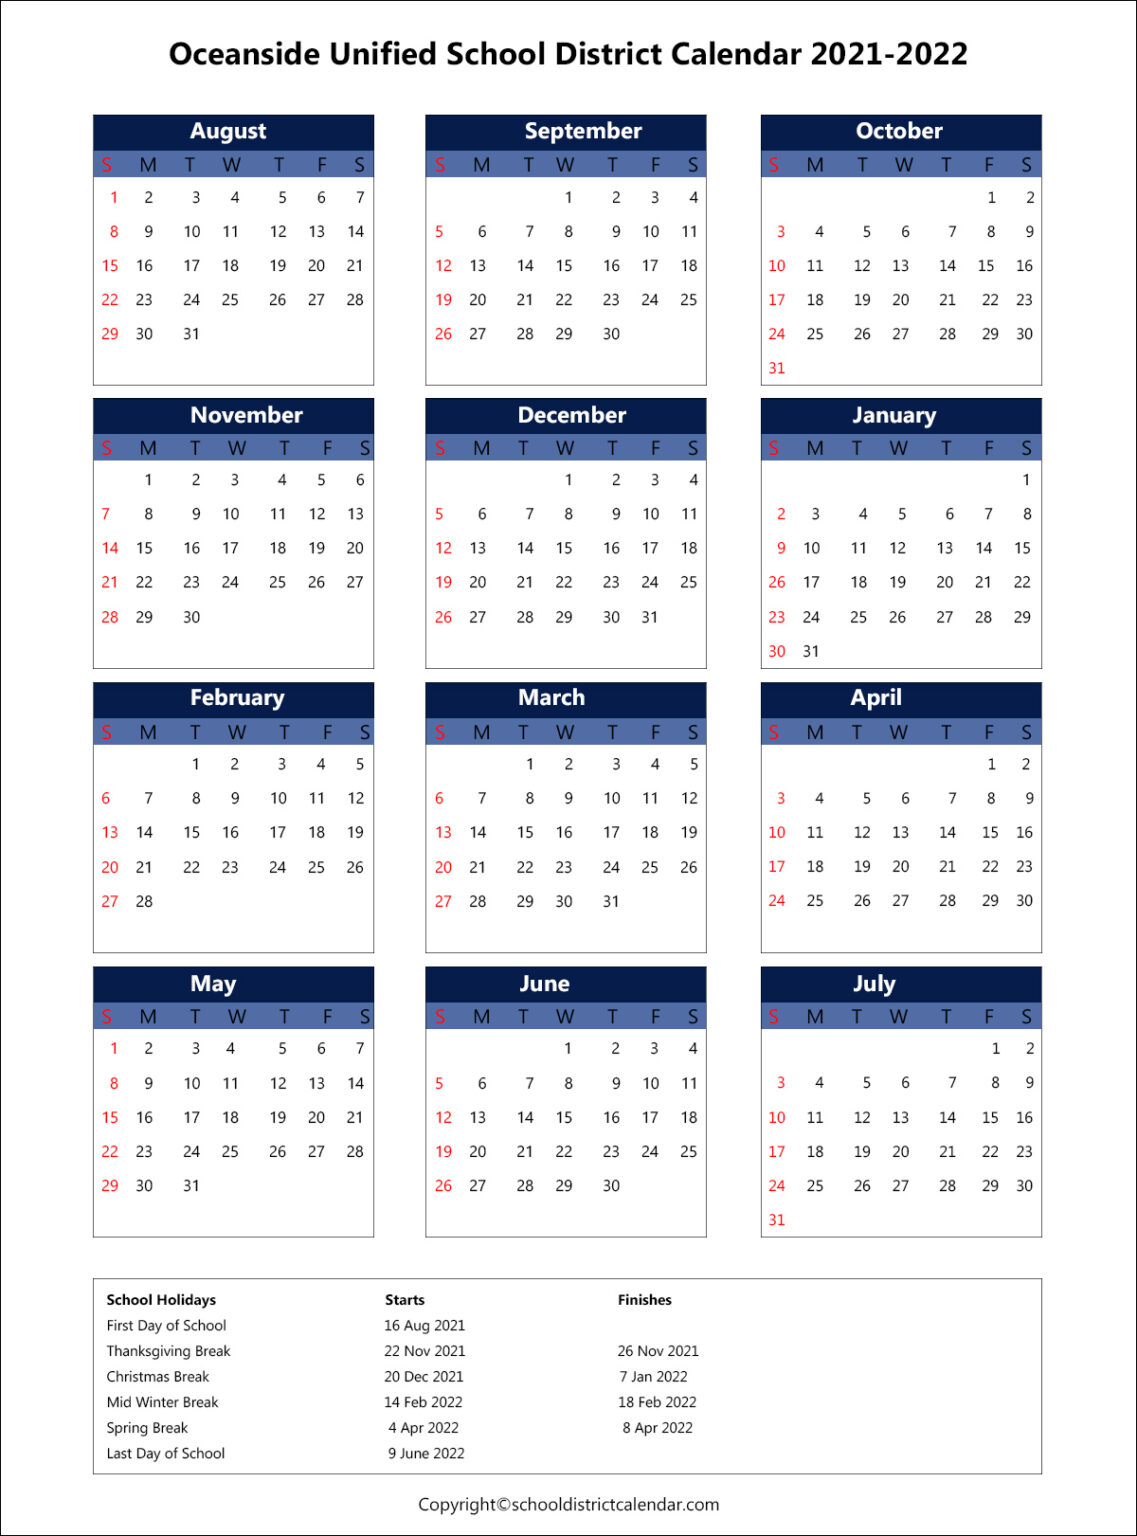 Oceanside Unified School District Calendar Holidays 2021-2022